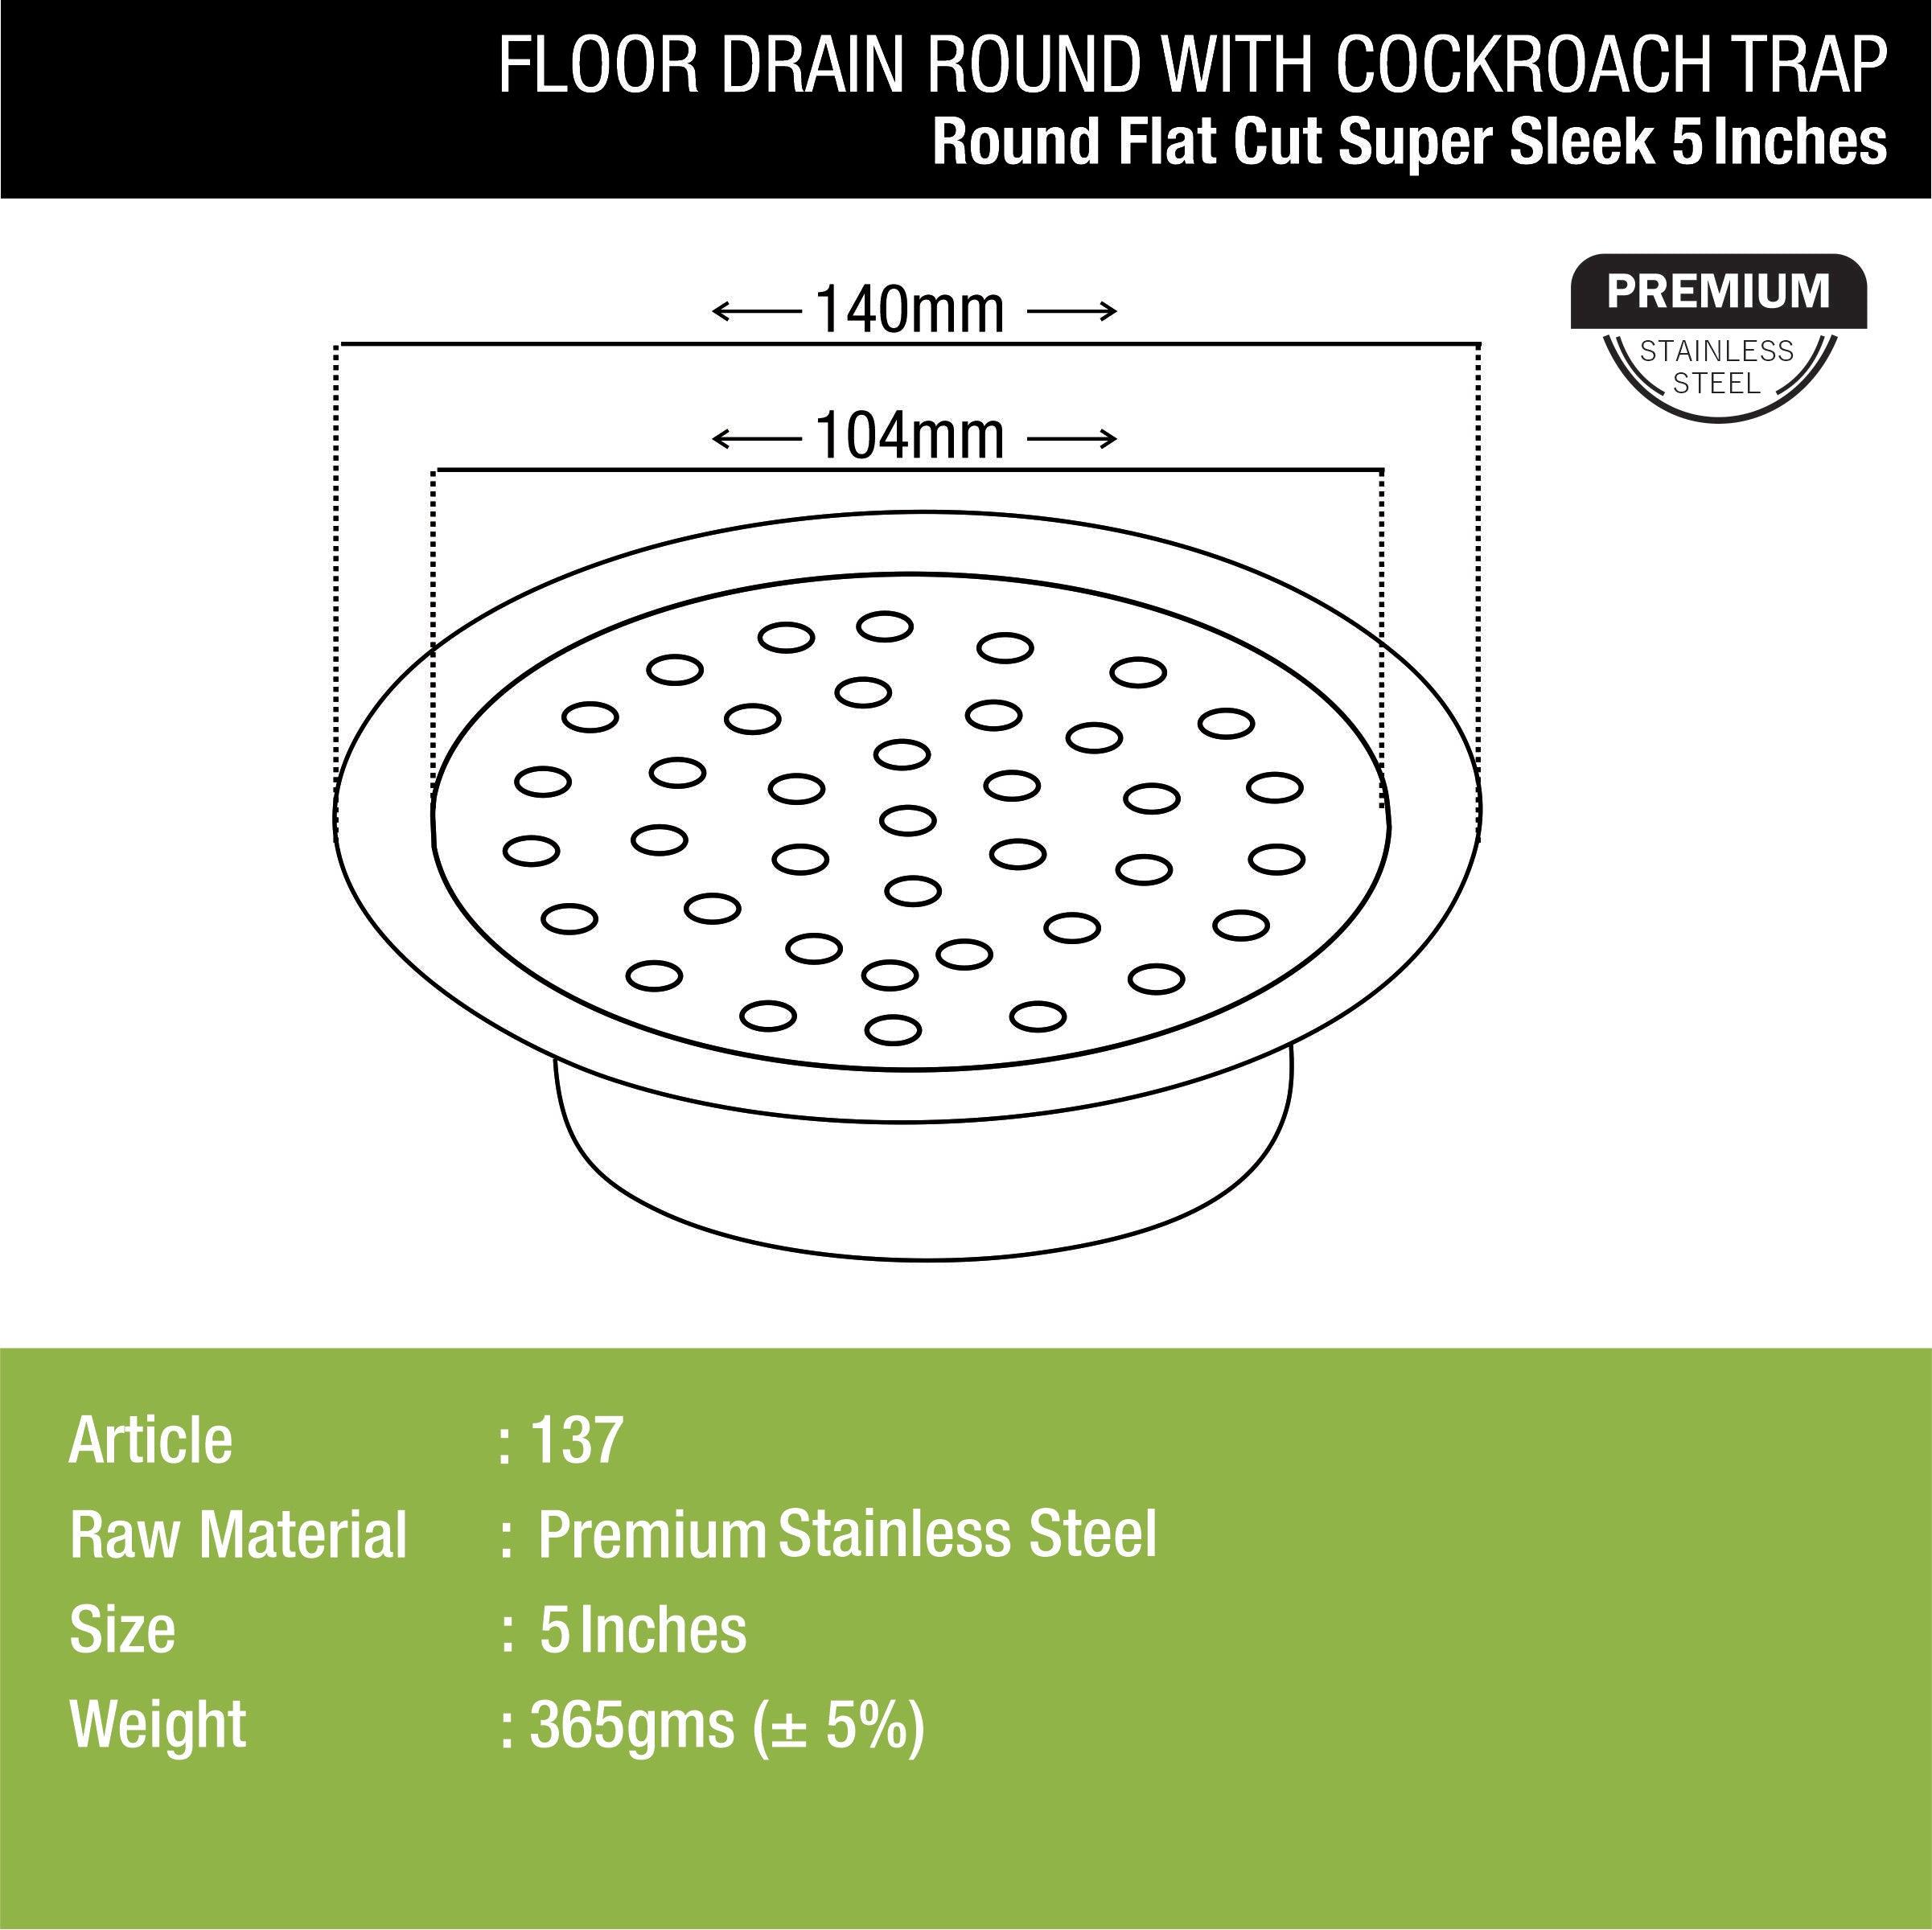 Super Sleek Round Flat Cut Floor Drain (5 Inches) with Cockroach Trap - LIPKA - Lipka Home